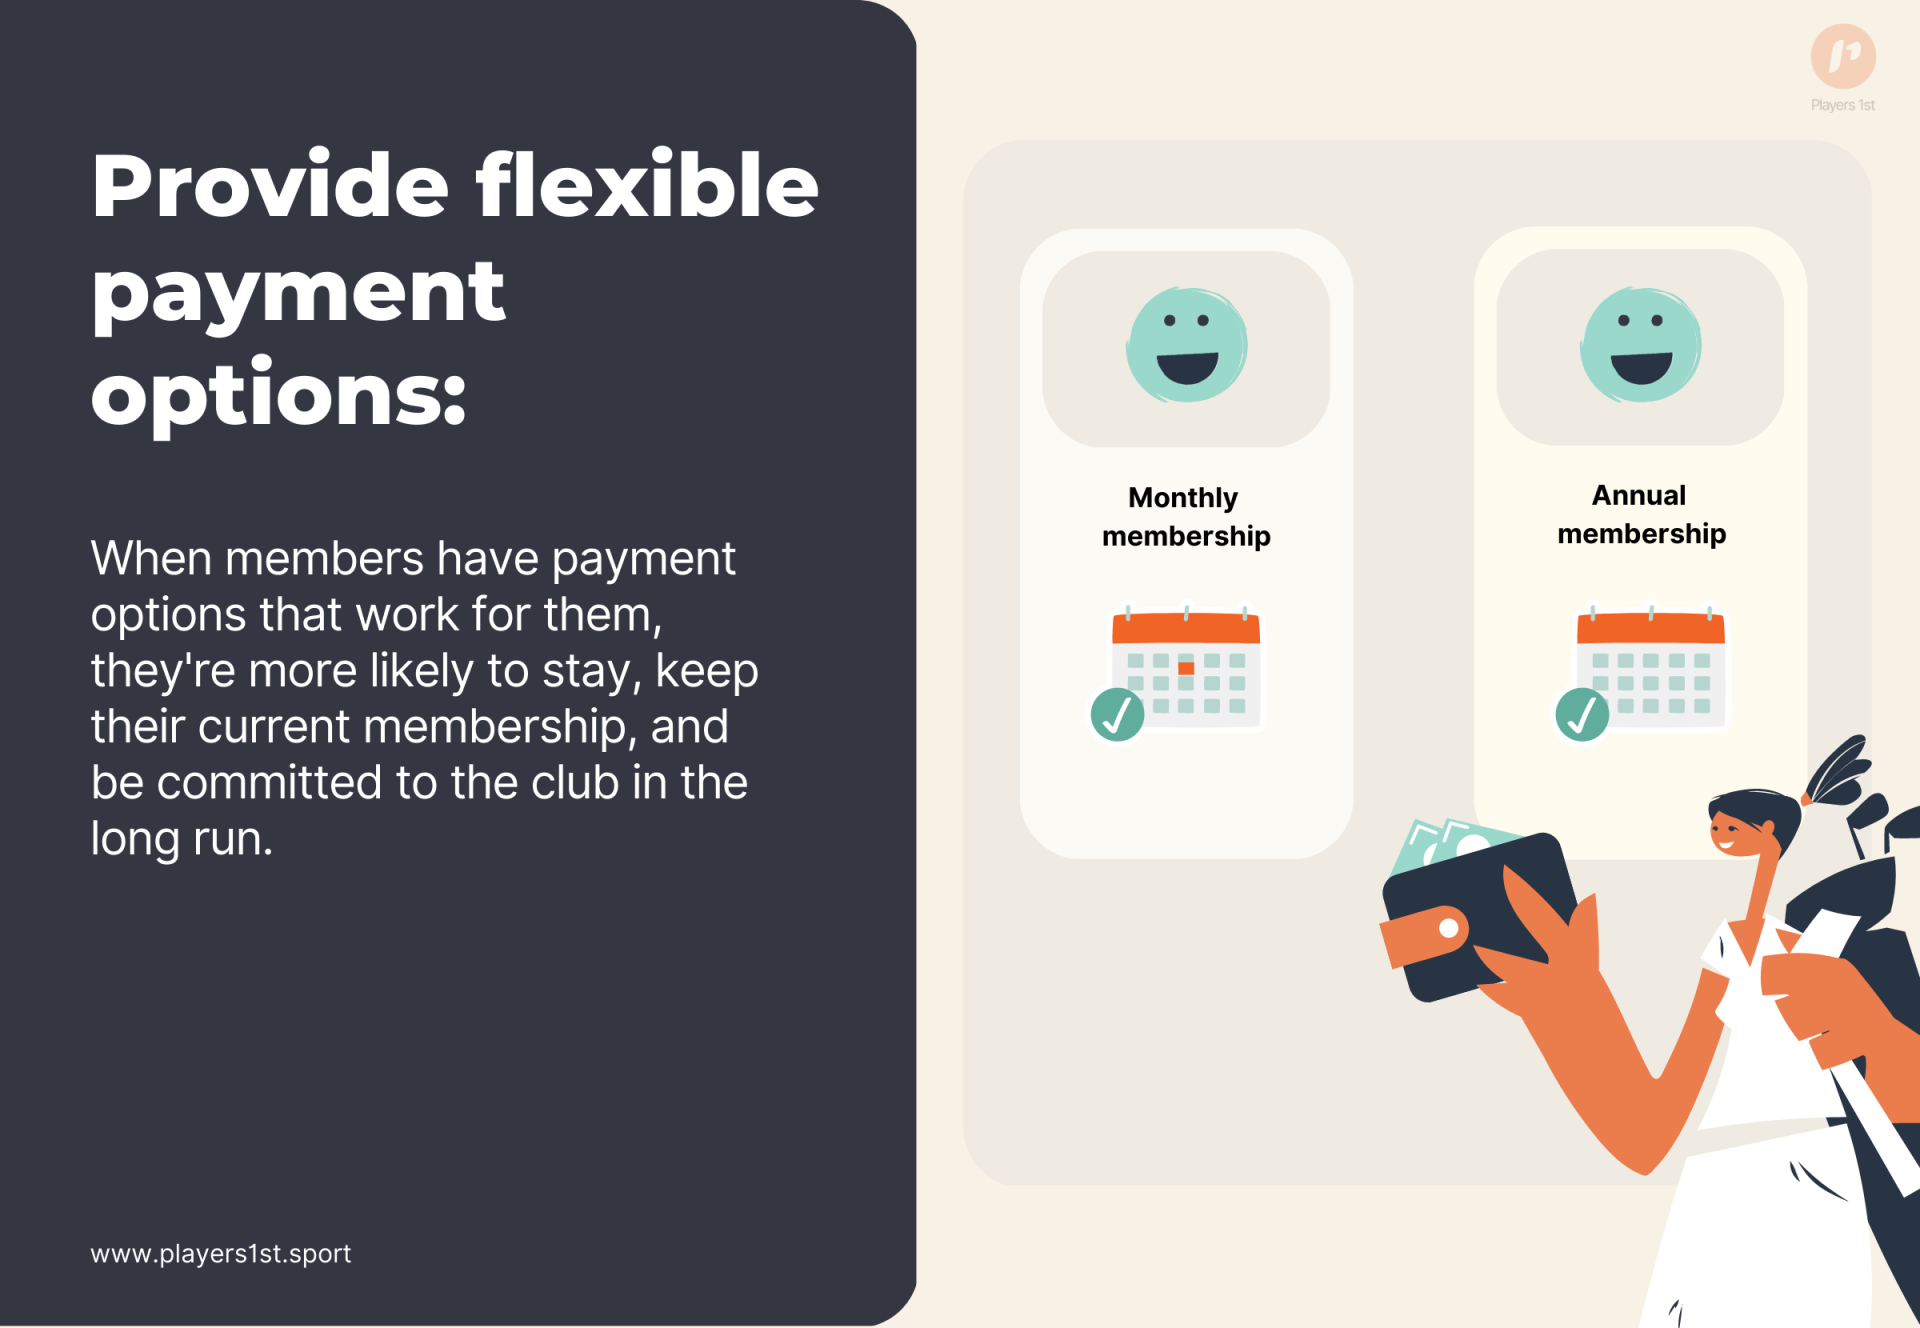 Image explaining the benefits of providing flexible payment options.